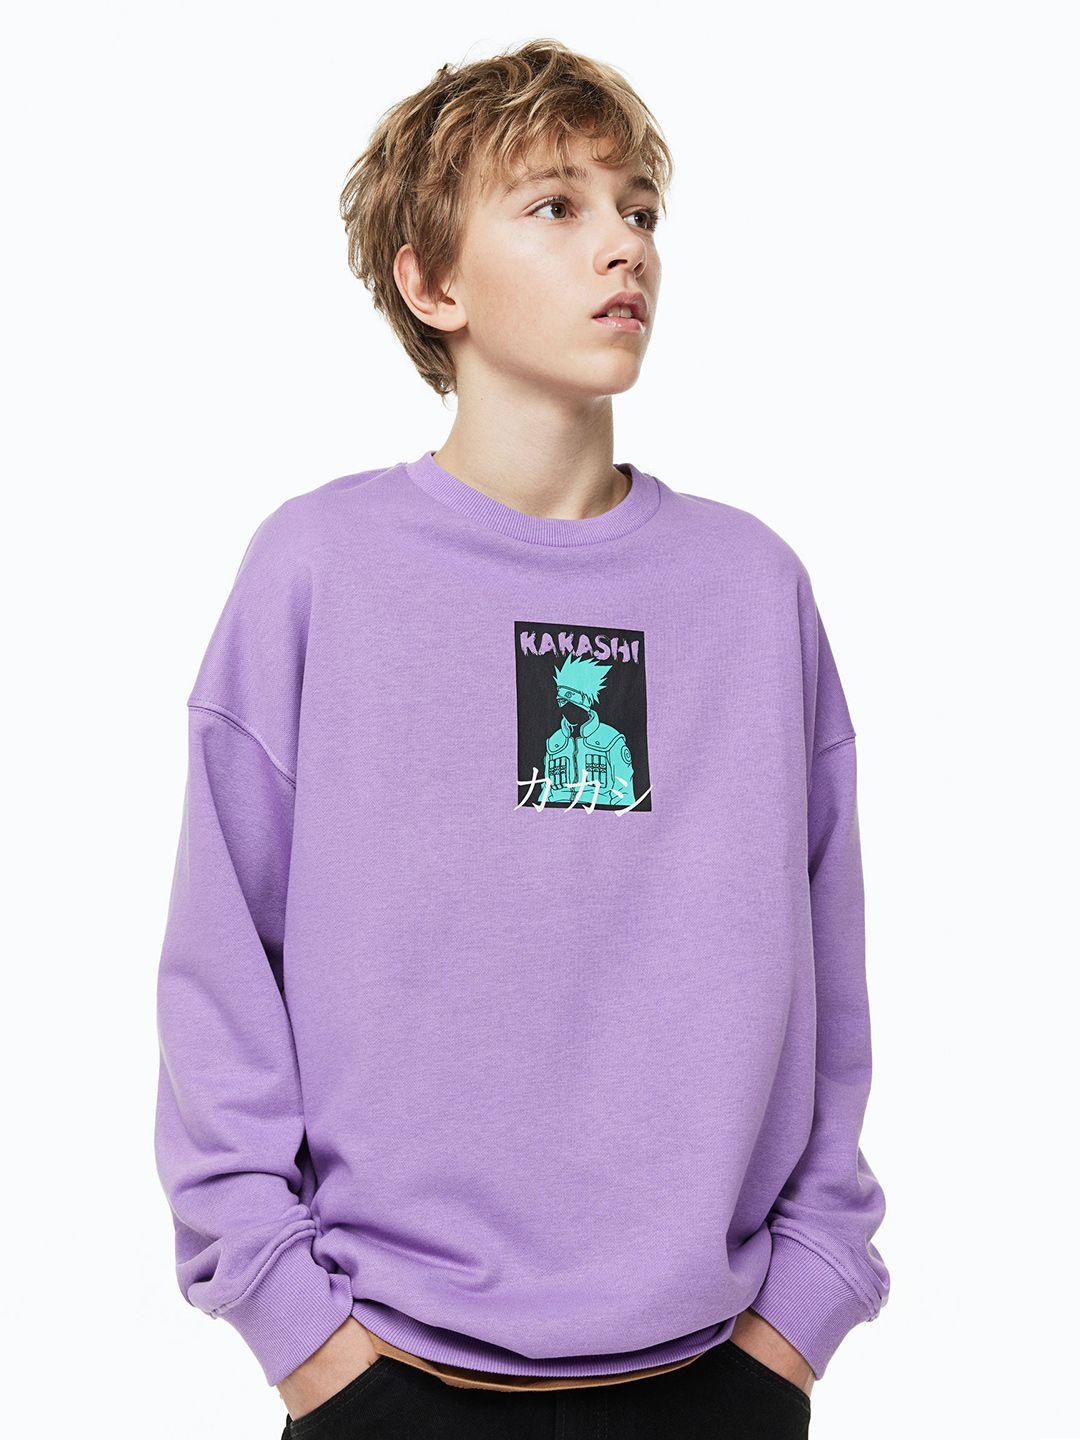 h&m boys printed sweatshirt